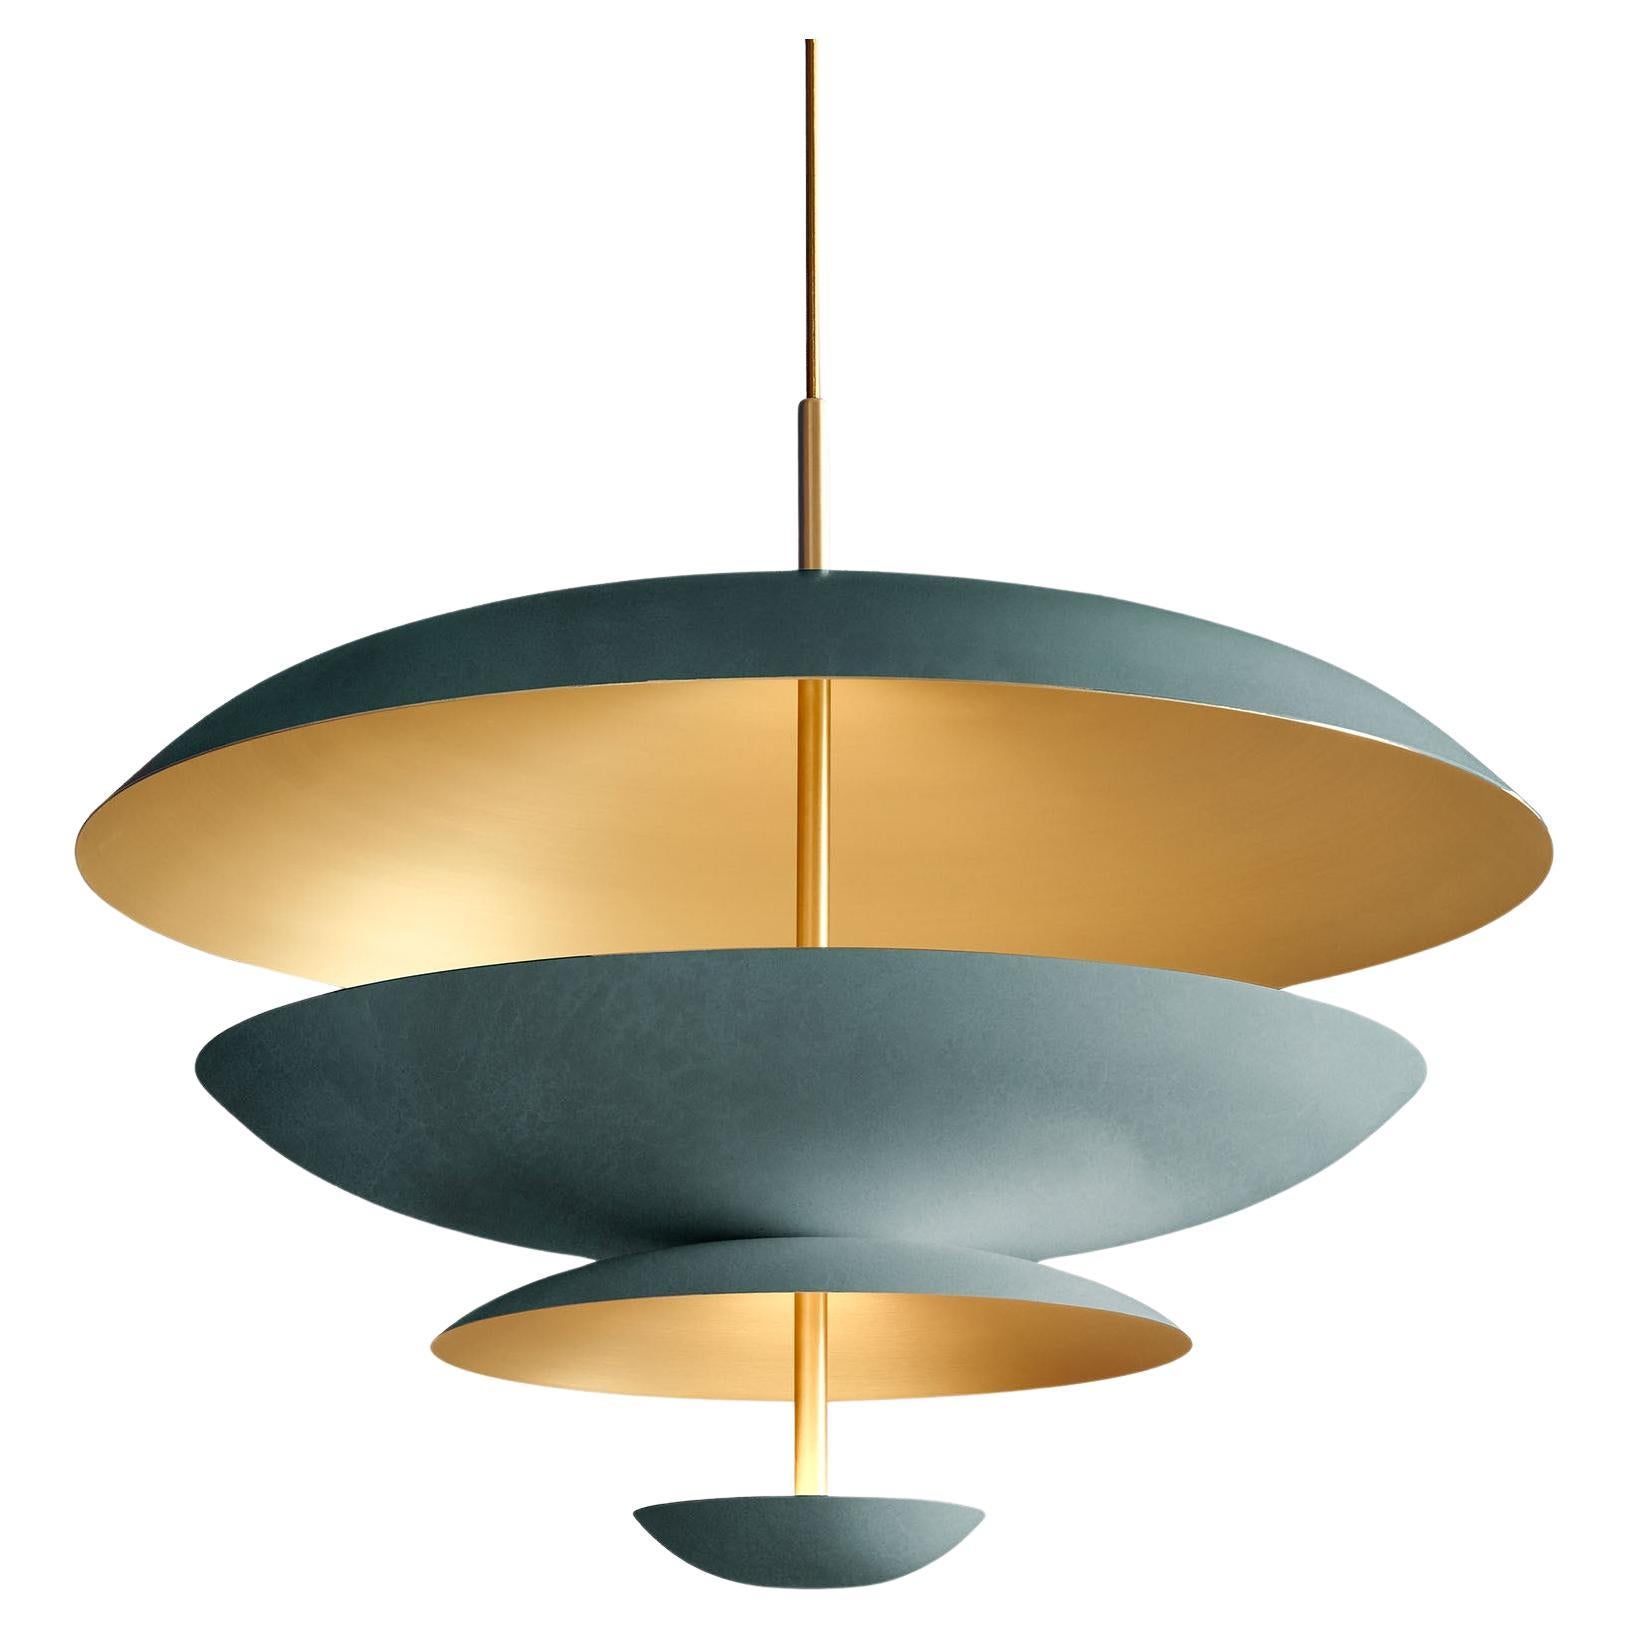 'Cosmic Verdigris Chandelier 100' Verdigris Patinated Brass Ceiling Light For Sale